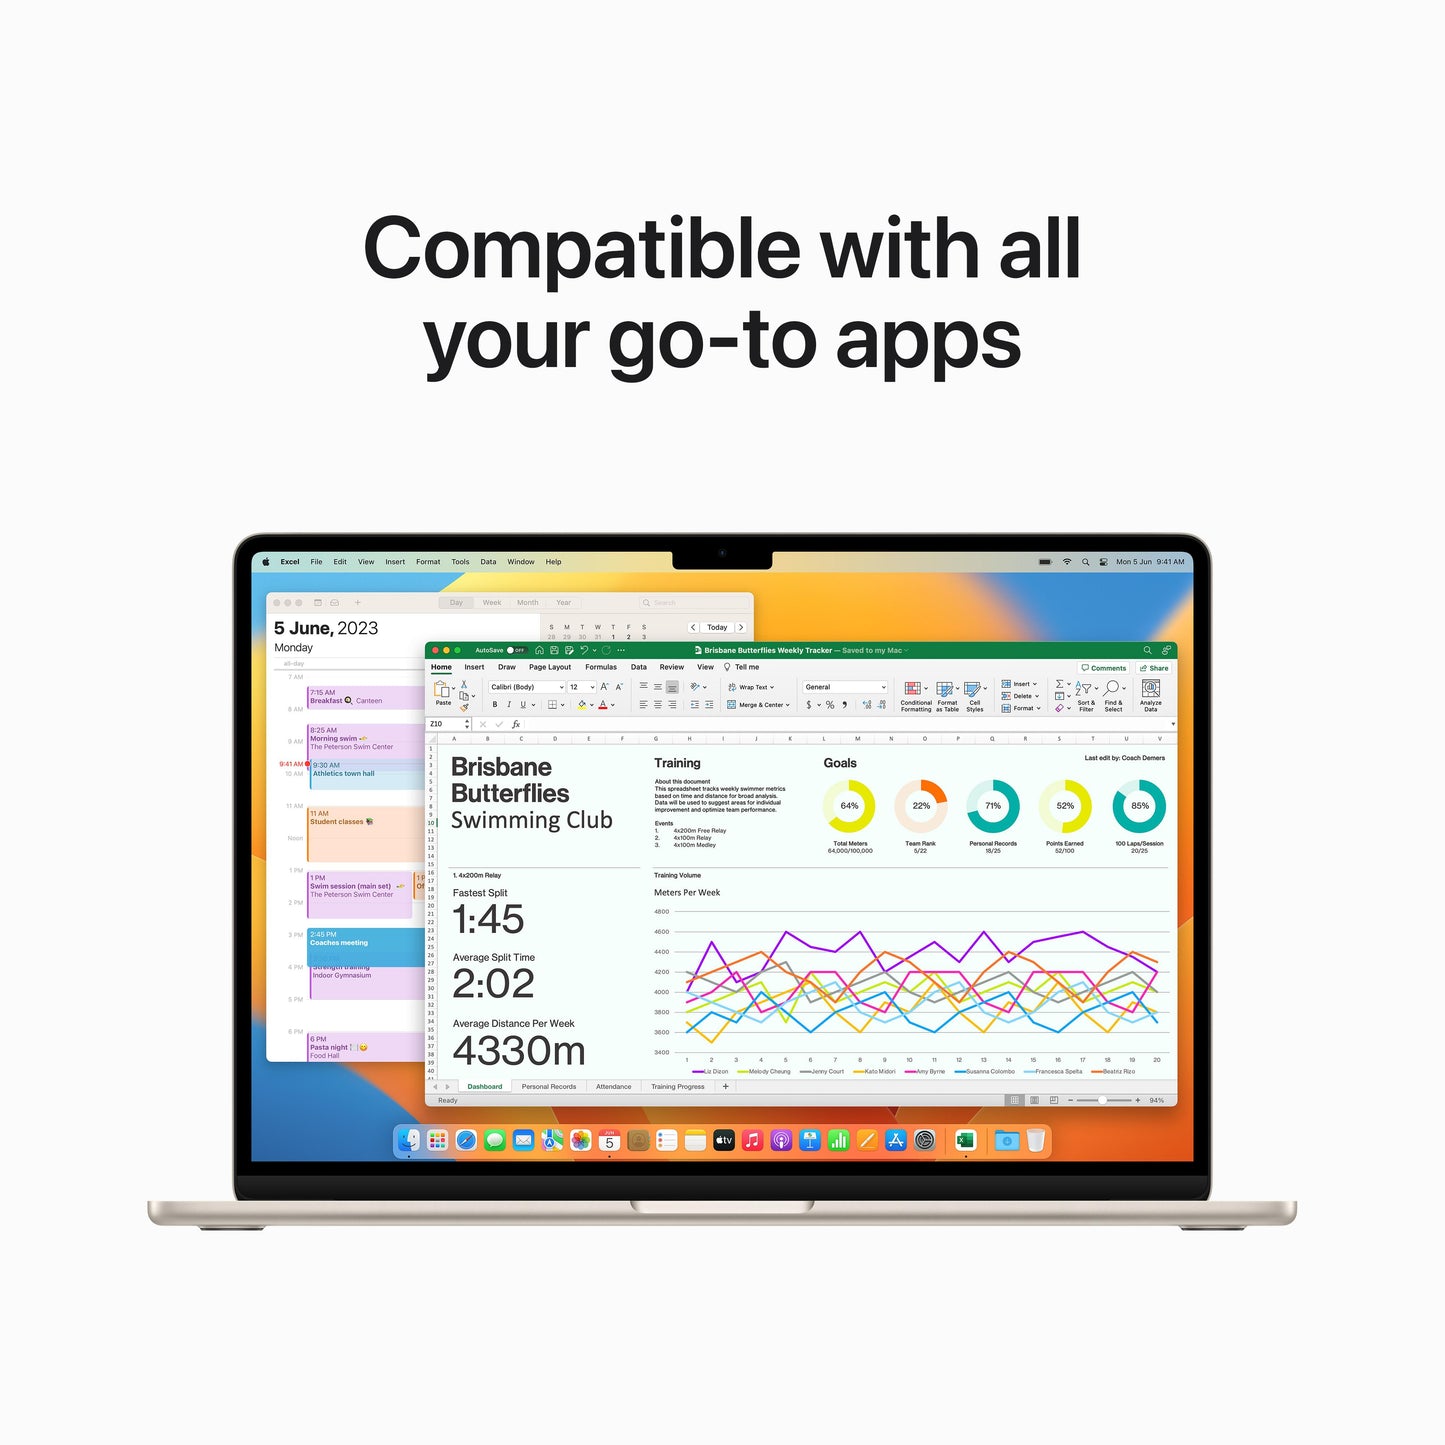 15-inch MacBook Air: Apple M2 chip with 8_core CPU and 10_core GPU, 256GB SSD - Starlight